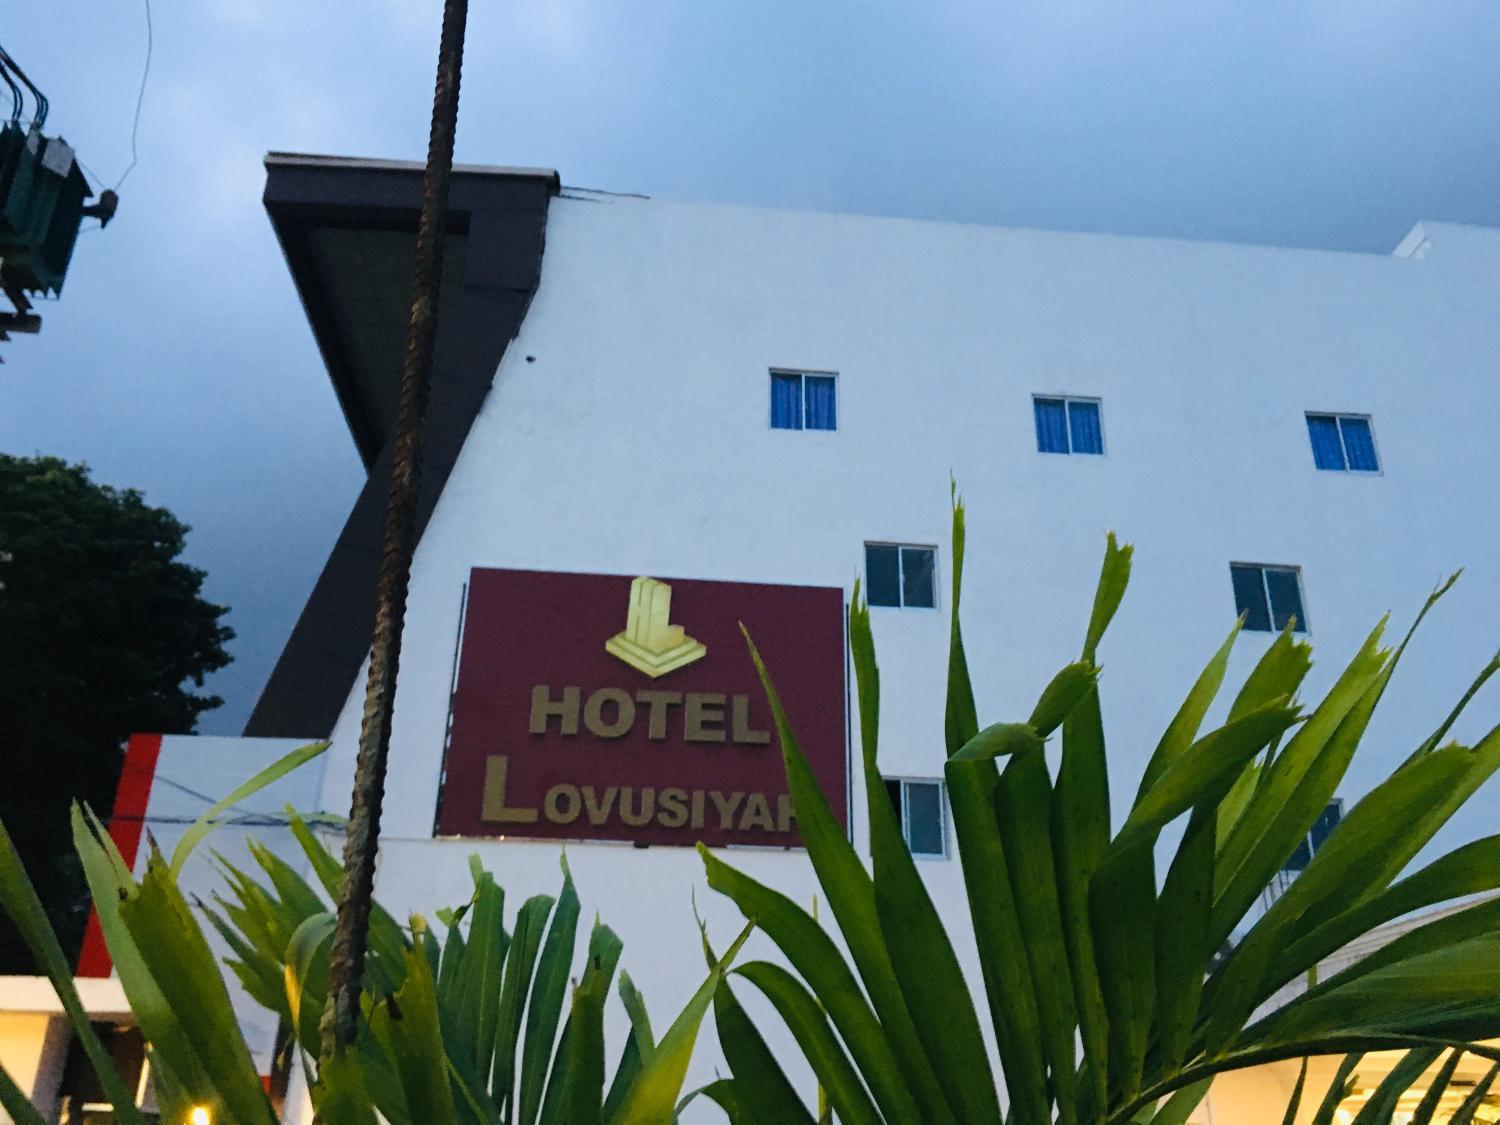 Hotel Lovusiyah, Jaffna